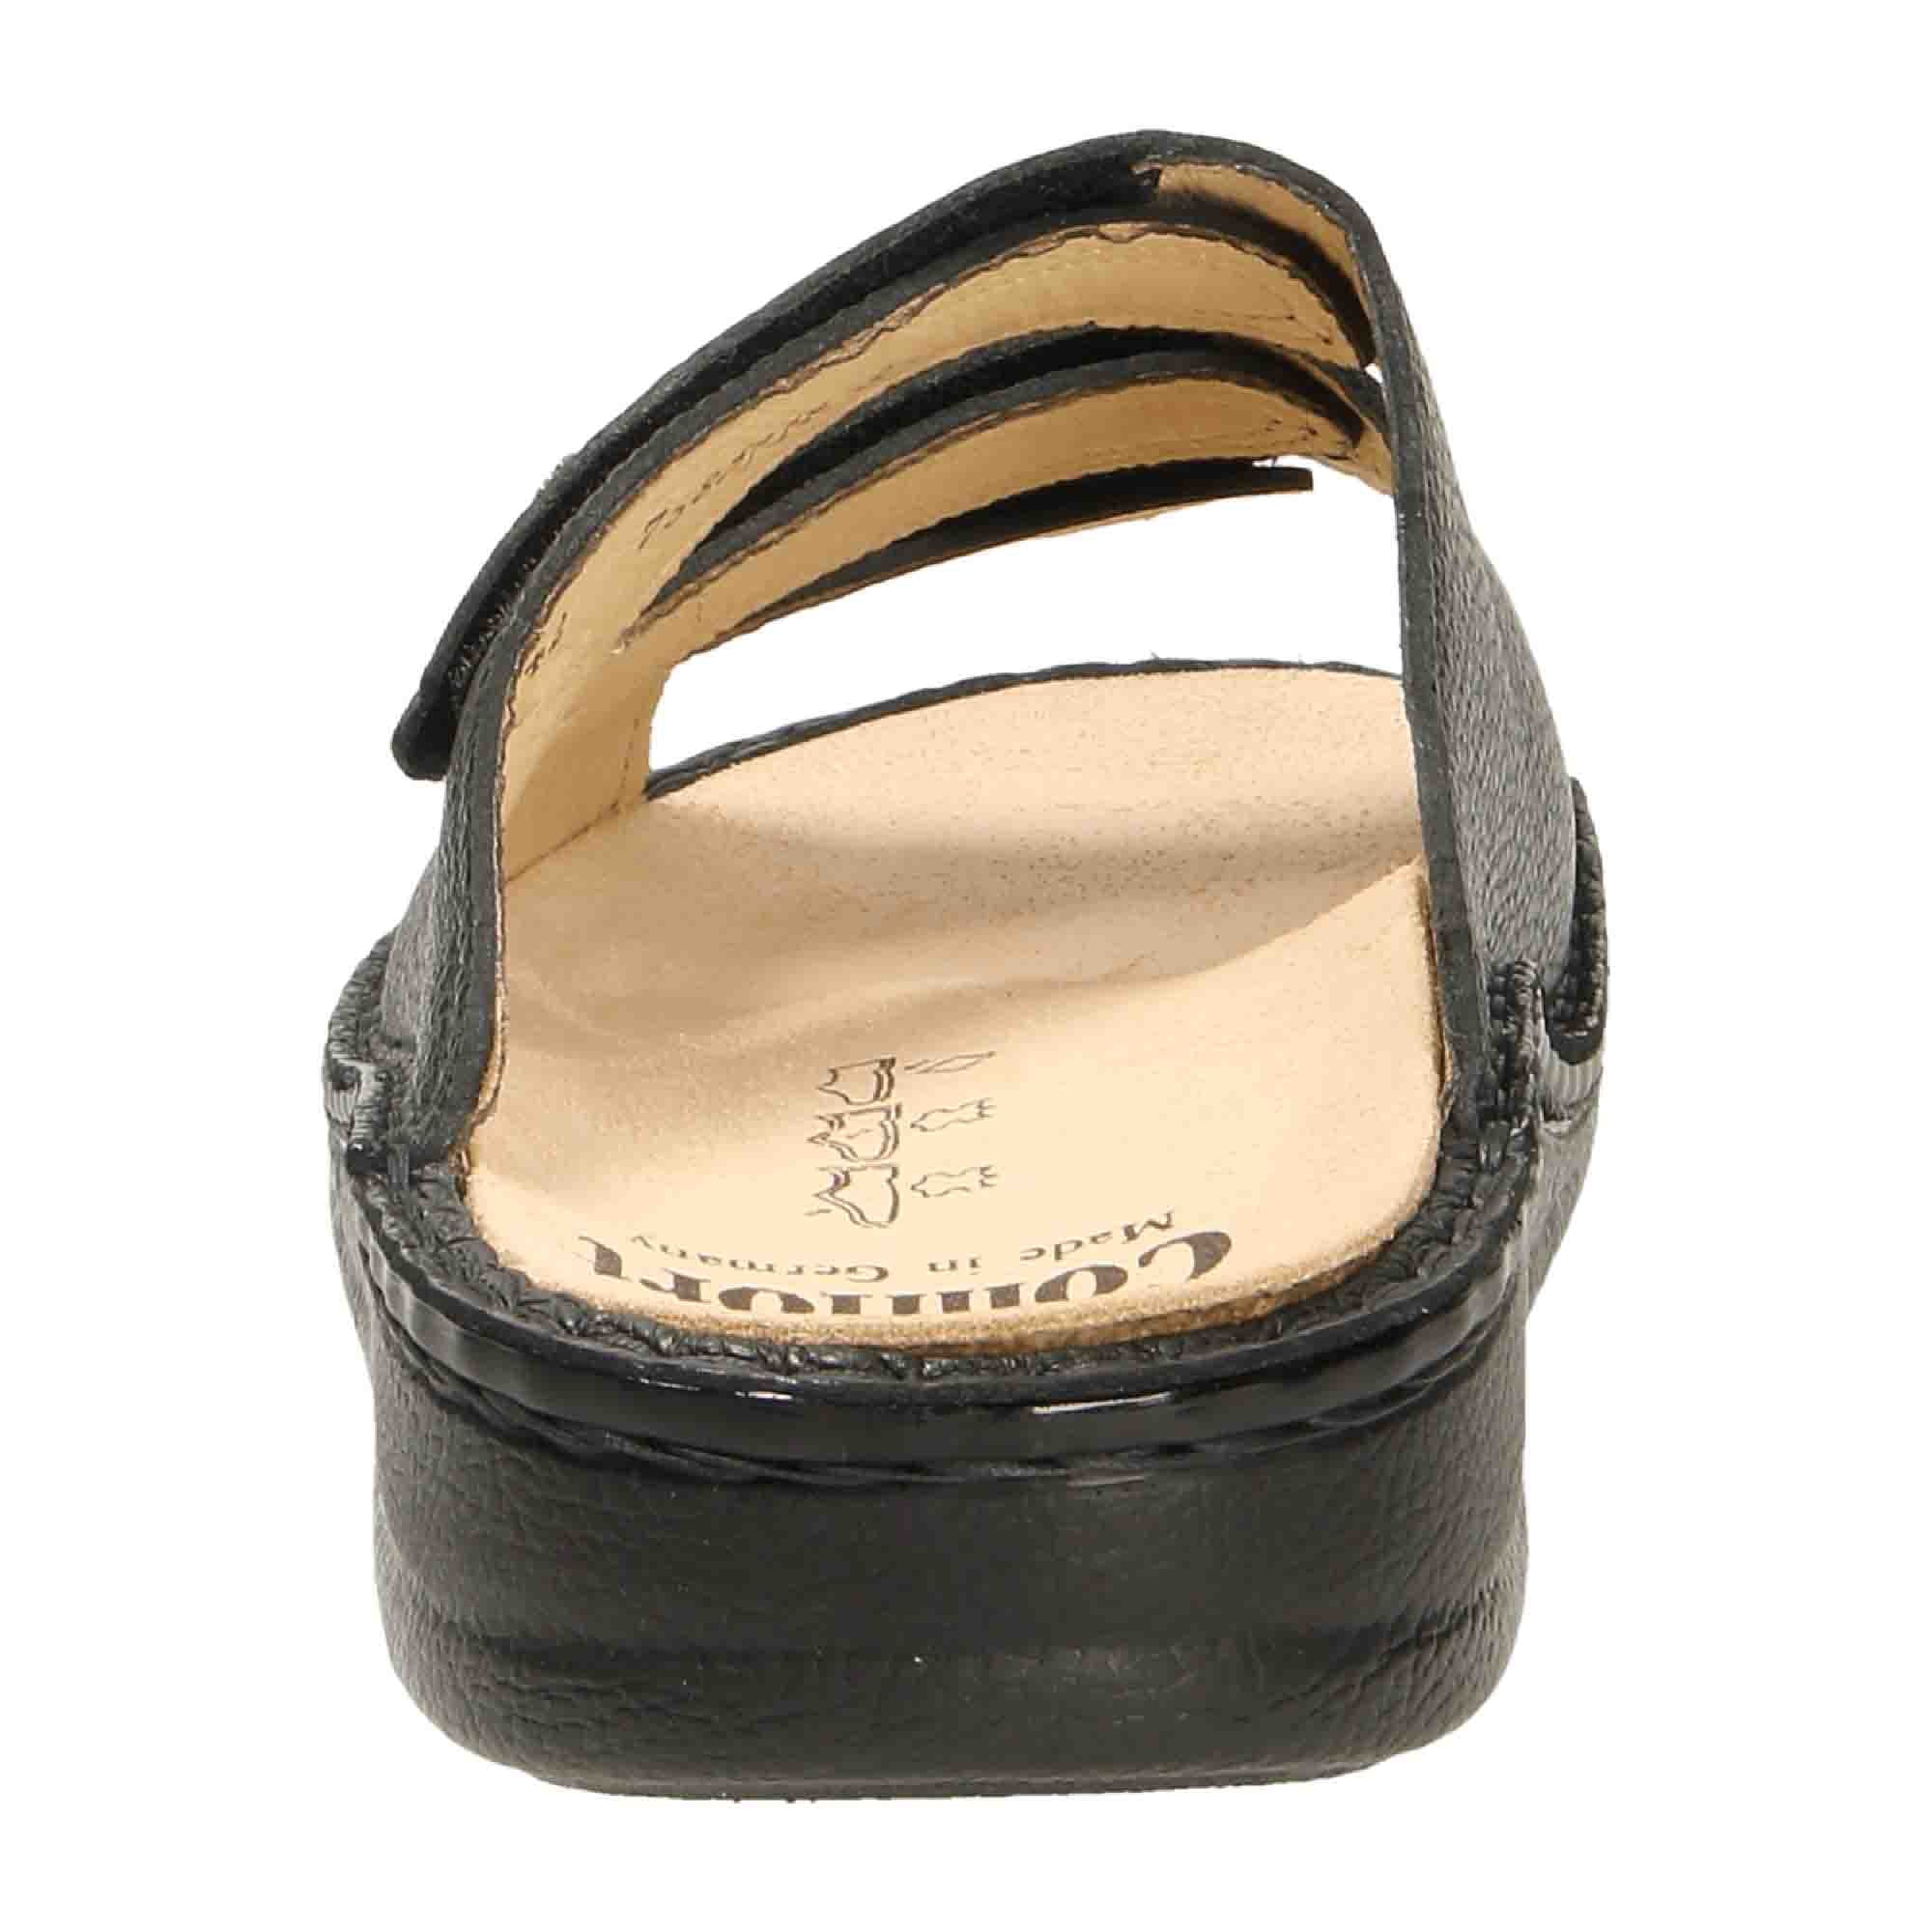 Finn Comfort Men's Comfortable Orthopedic Black Leather Shoes 1508-055099